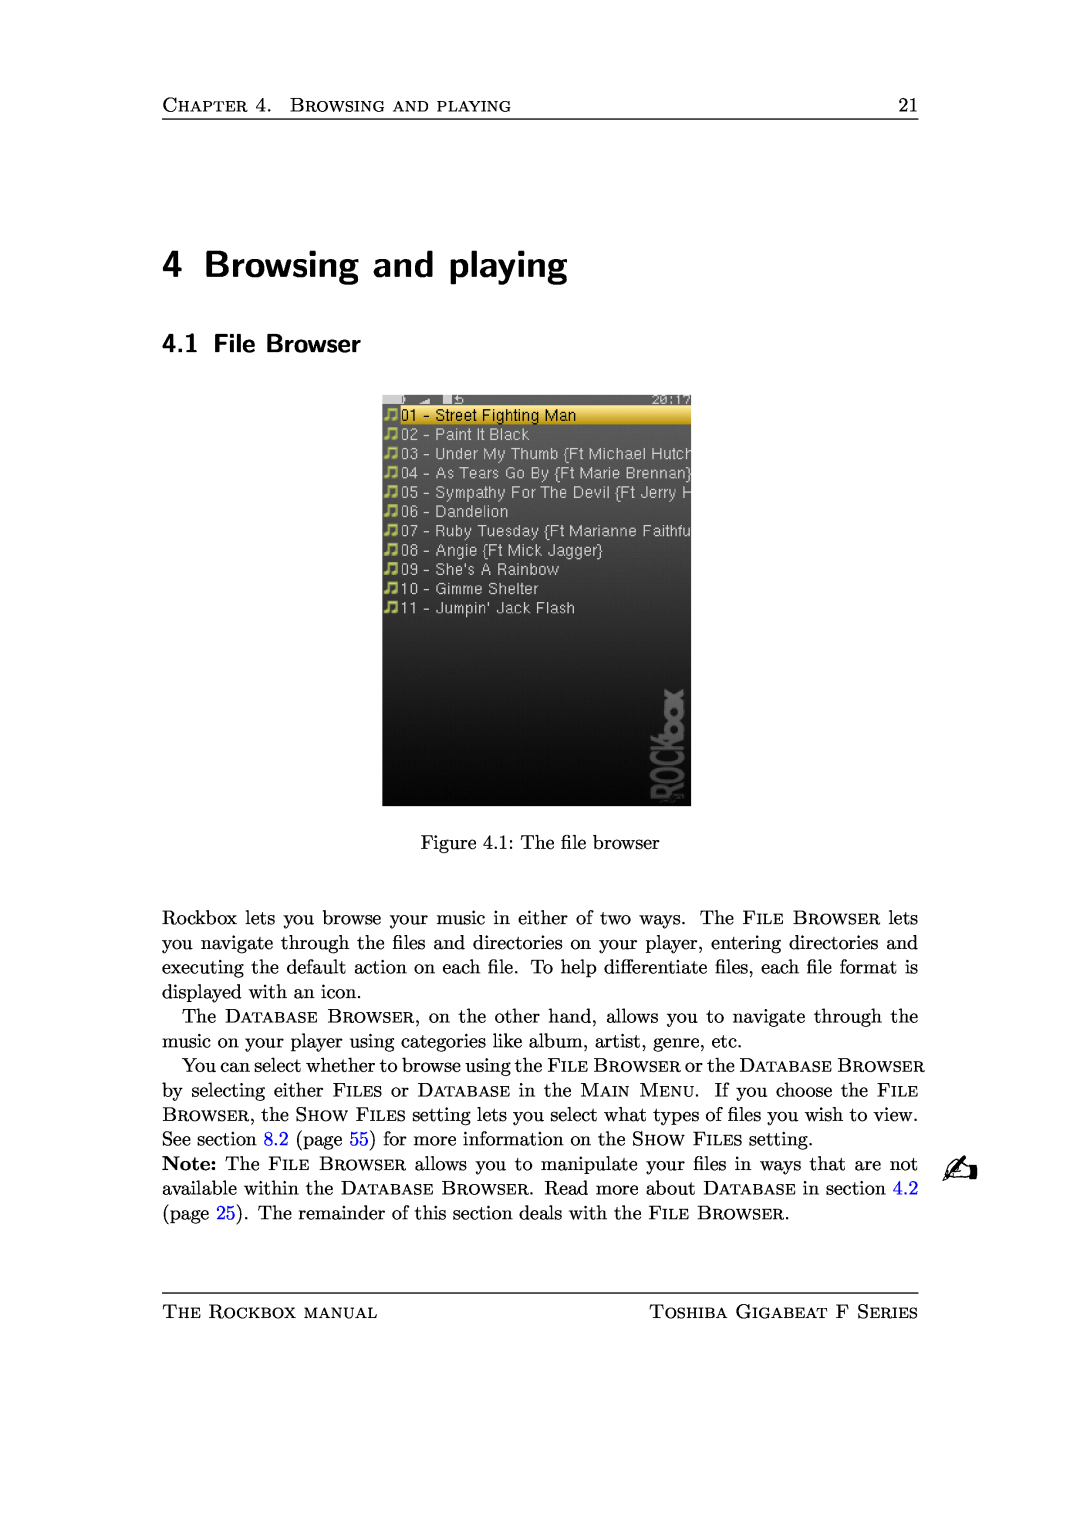 Toshiba F Series manual Browsing and playing, File Browser 